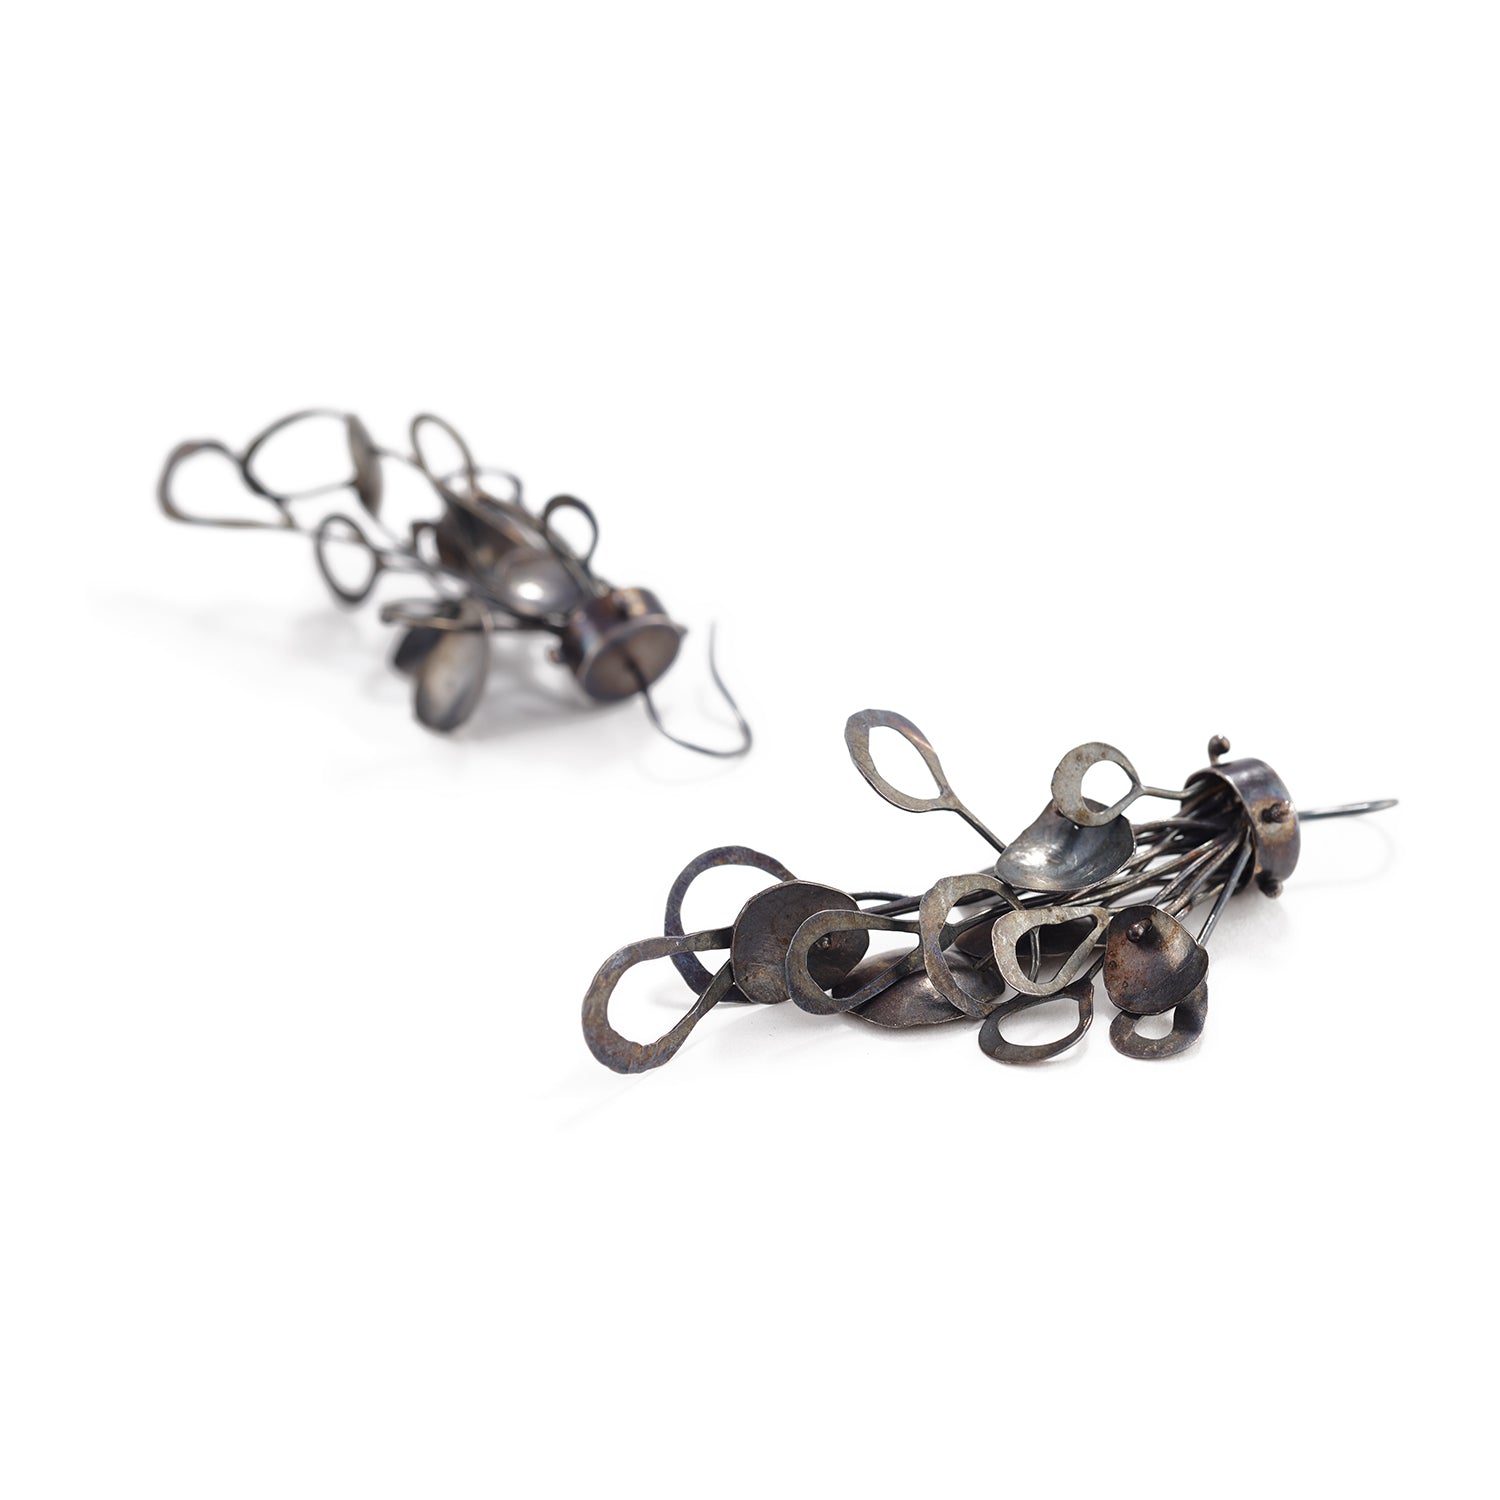 Oxidized Silver Rounds on Hooks Earrings